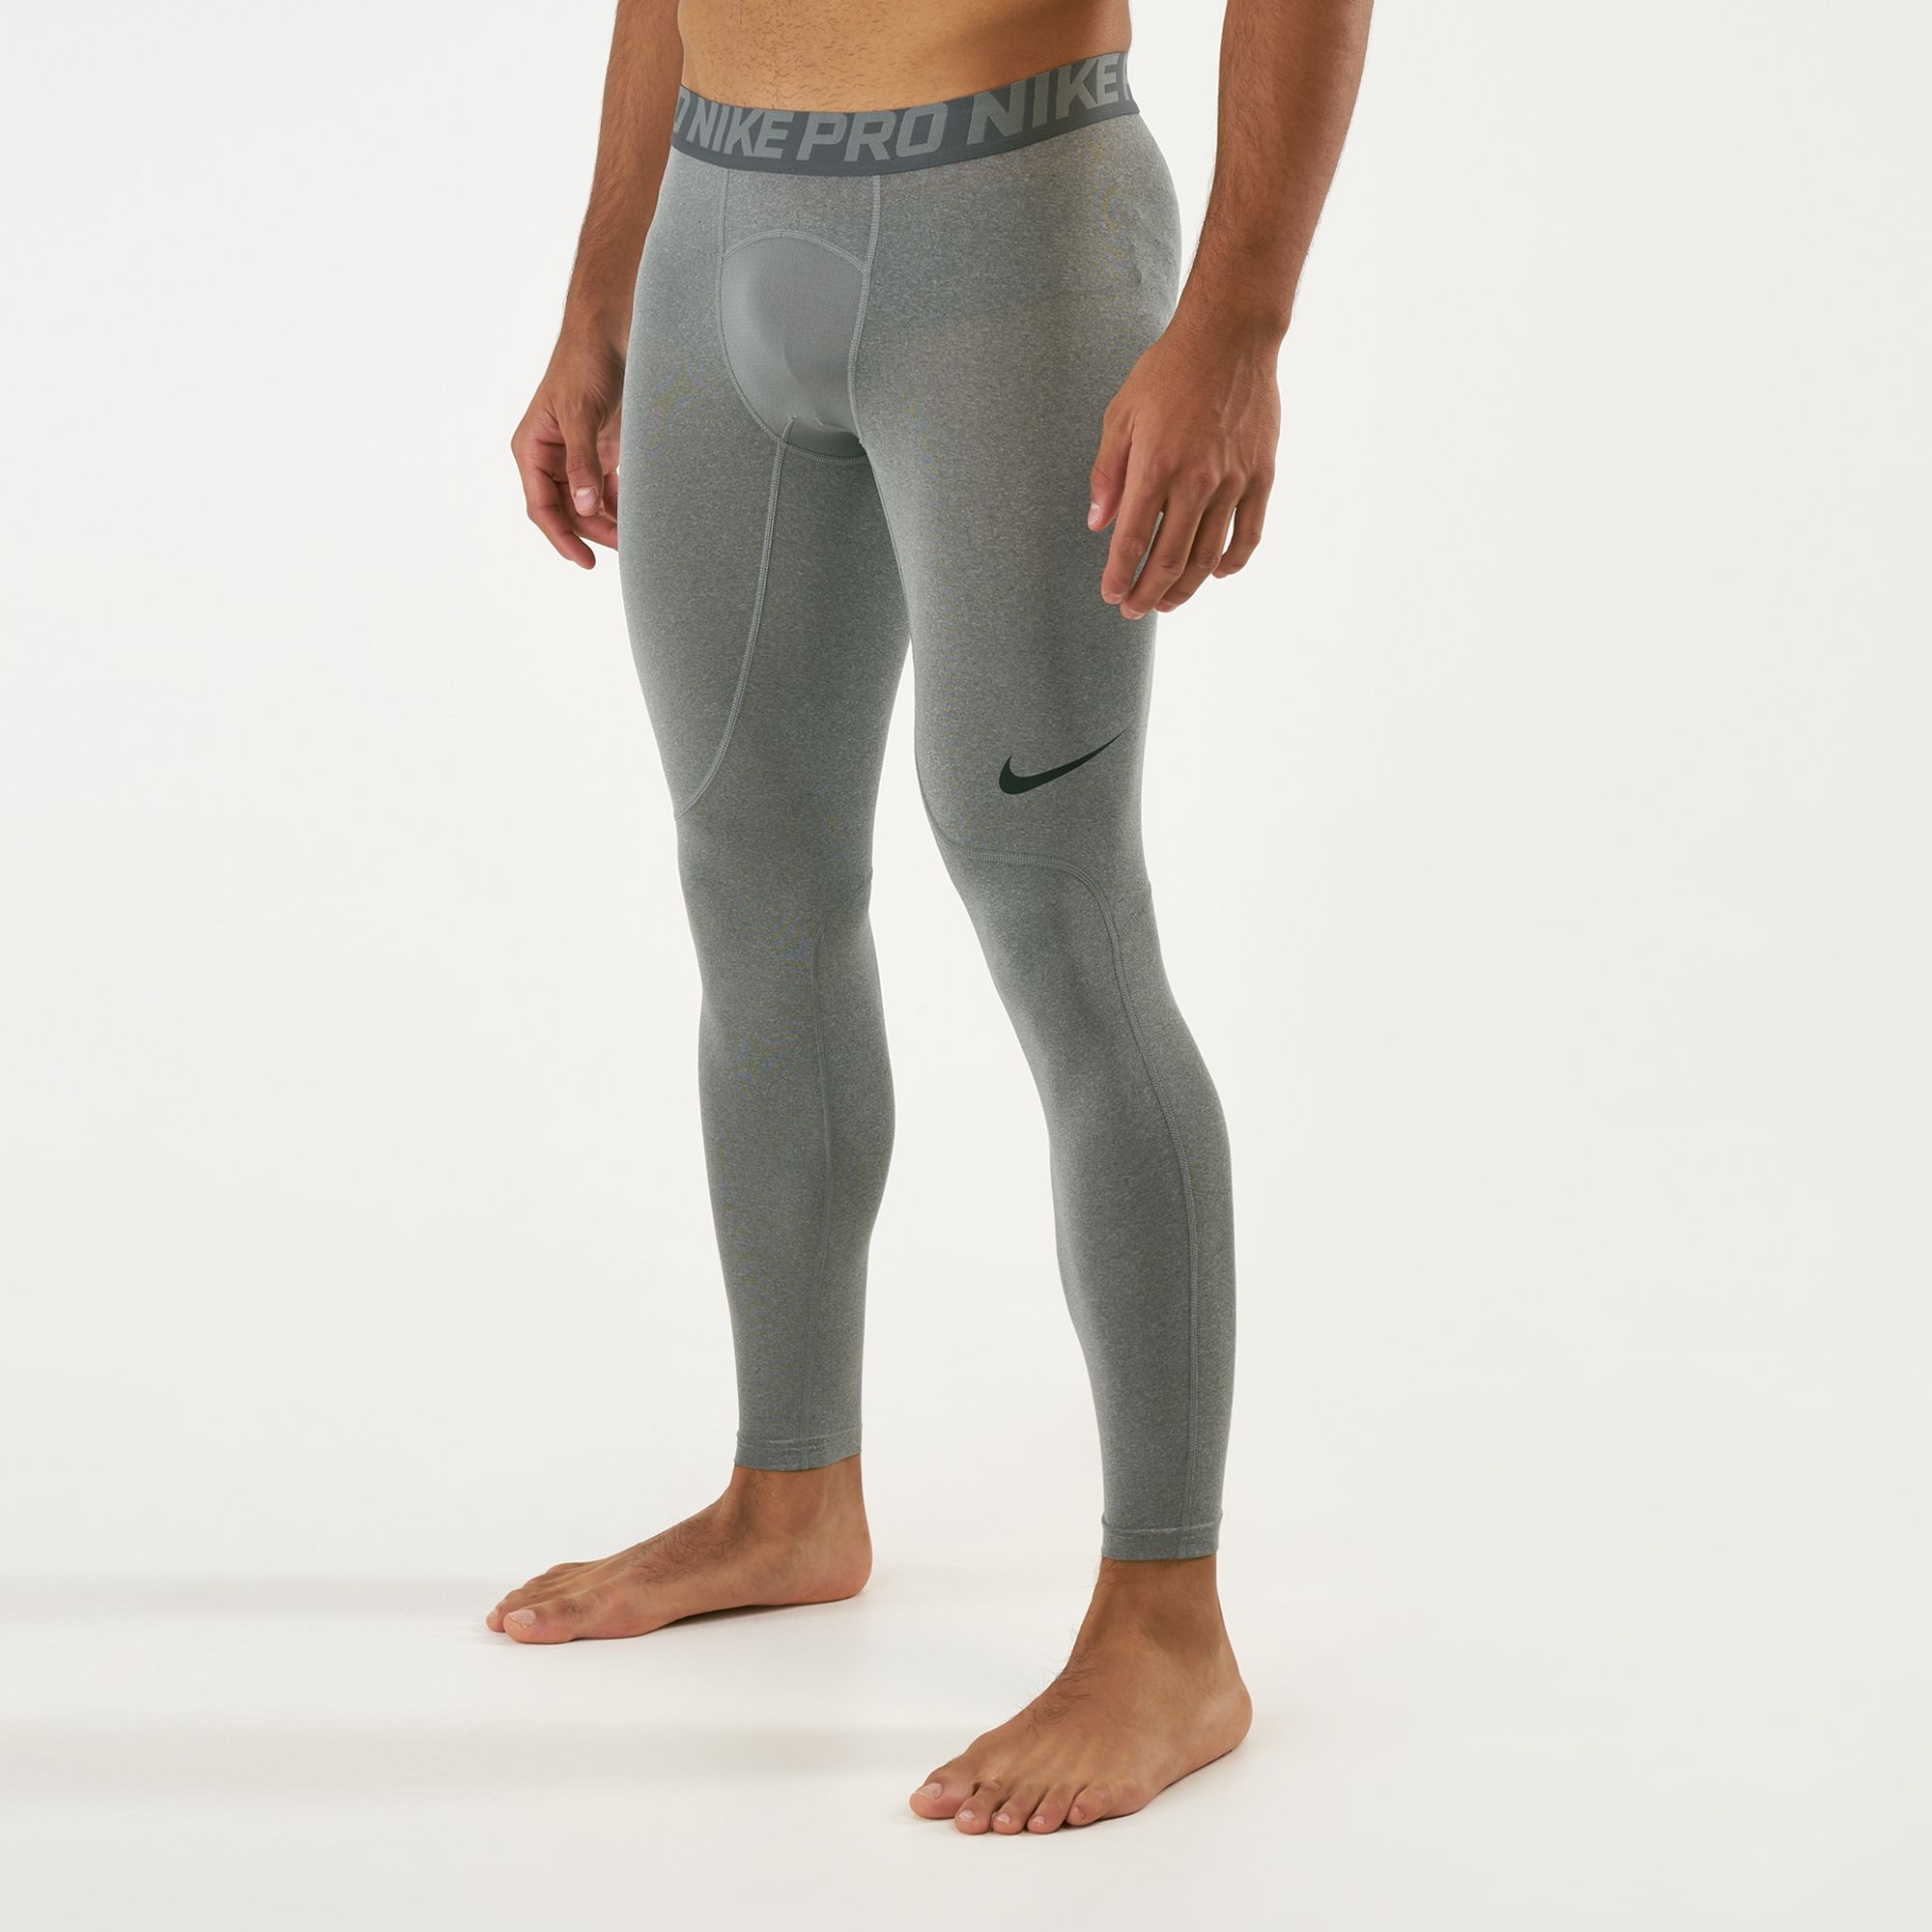 Nike Men's Pro Training Tights | Tights | Pants | Clothing | Men's Sale ...